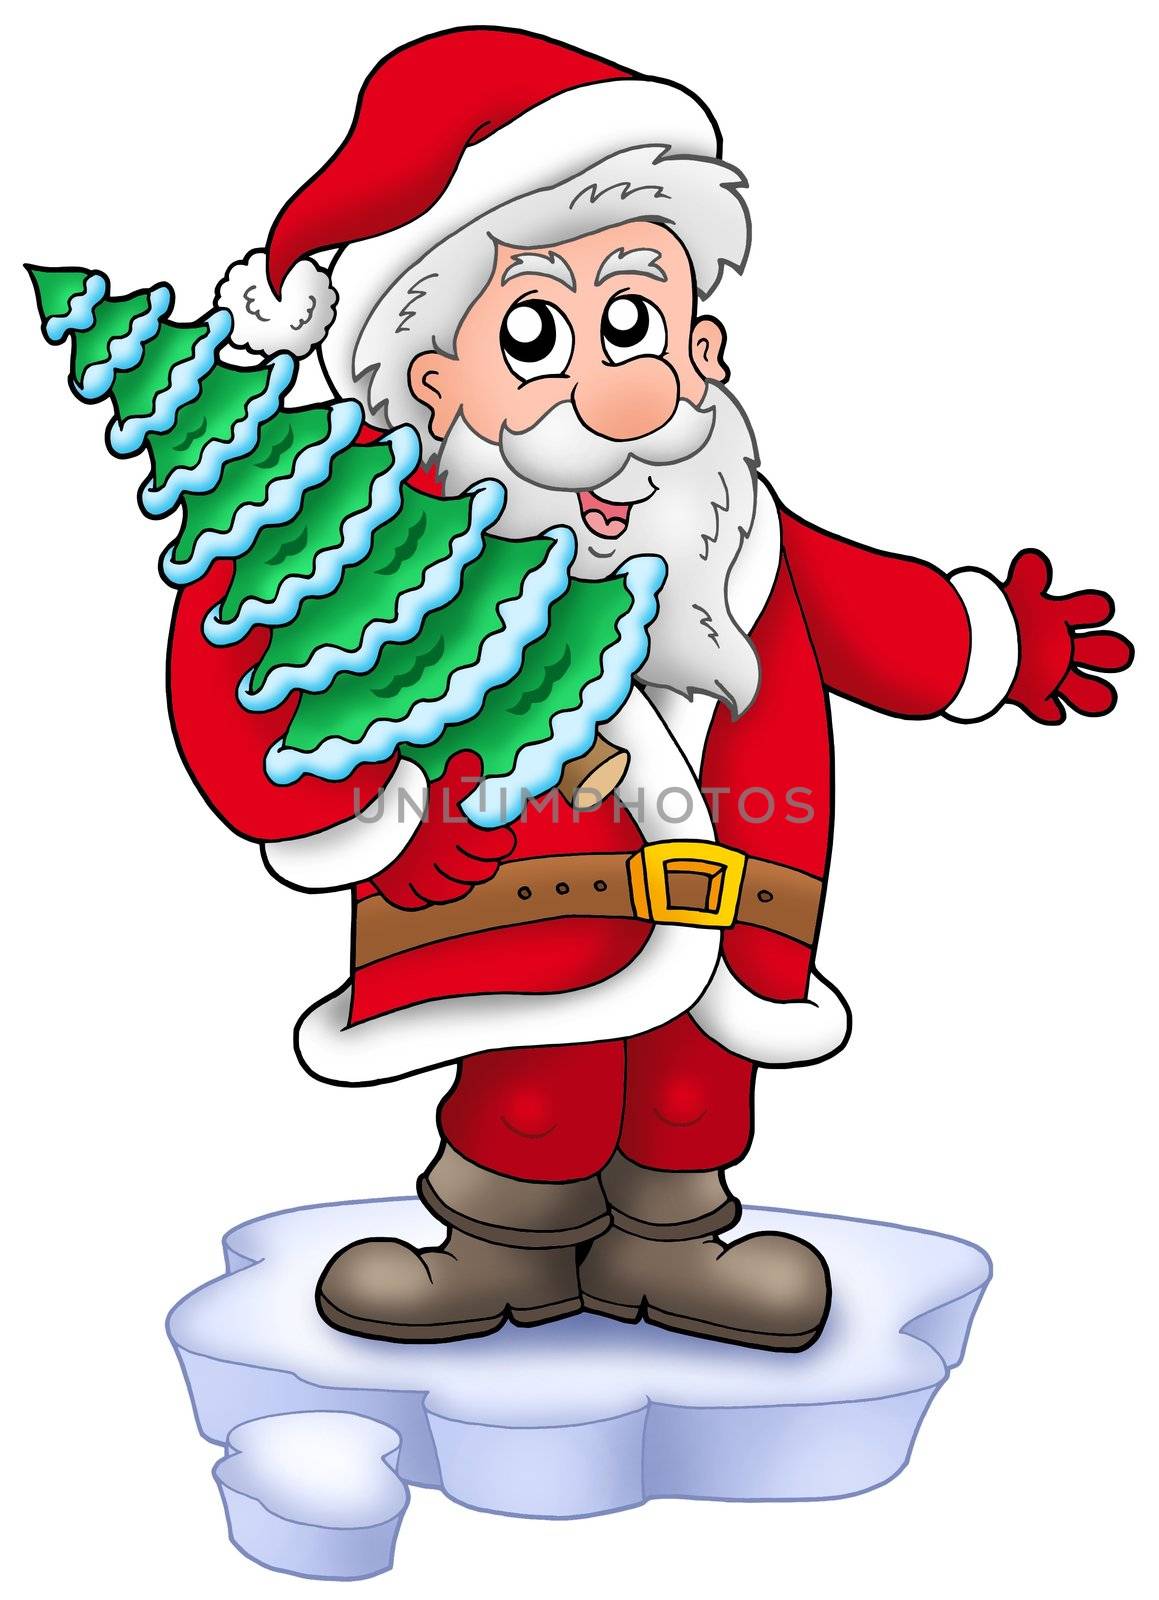 Santa with Christmas tree on iceberg - color illustration. 